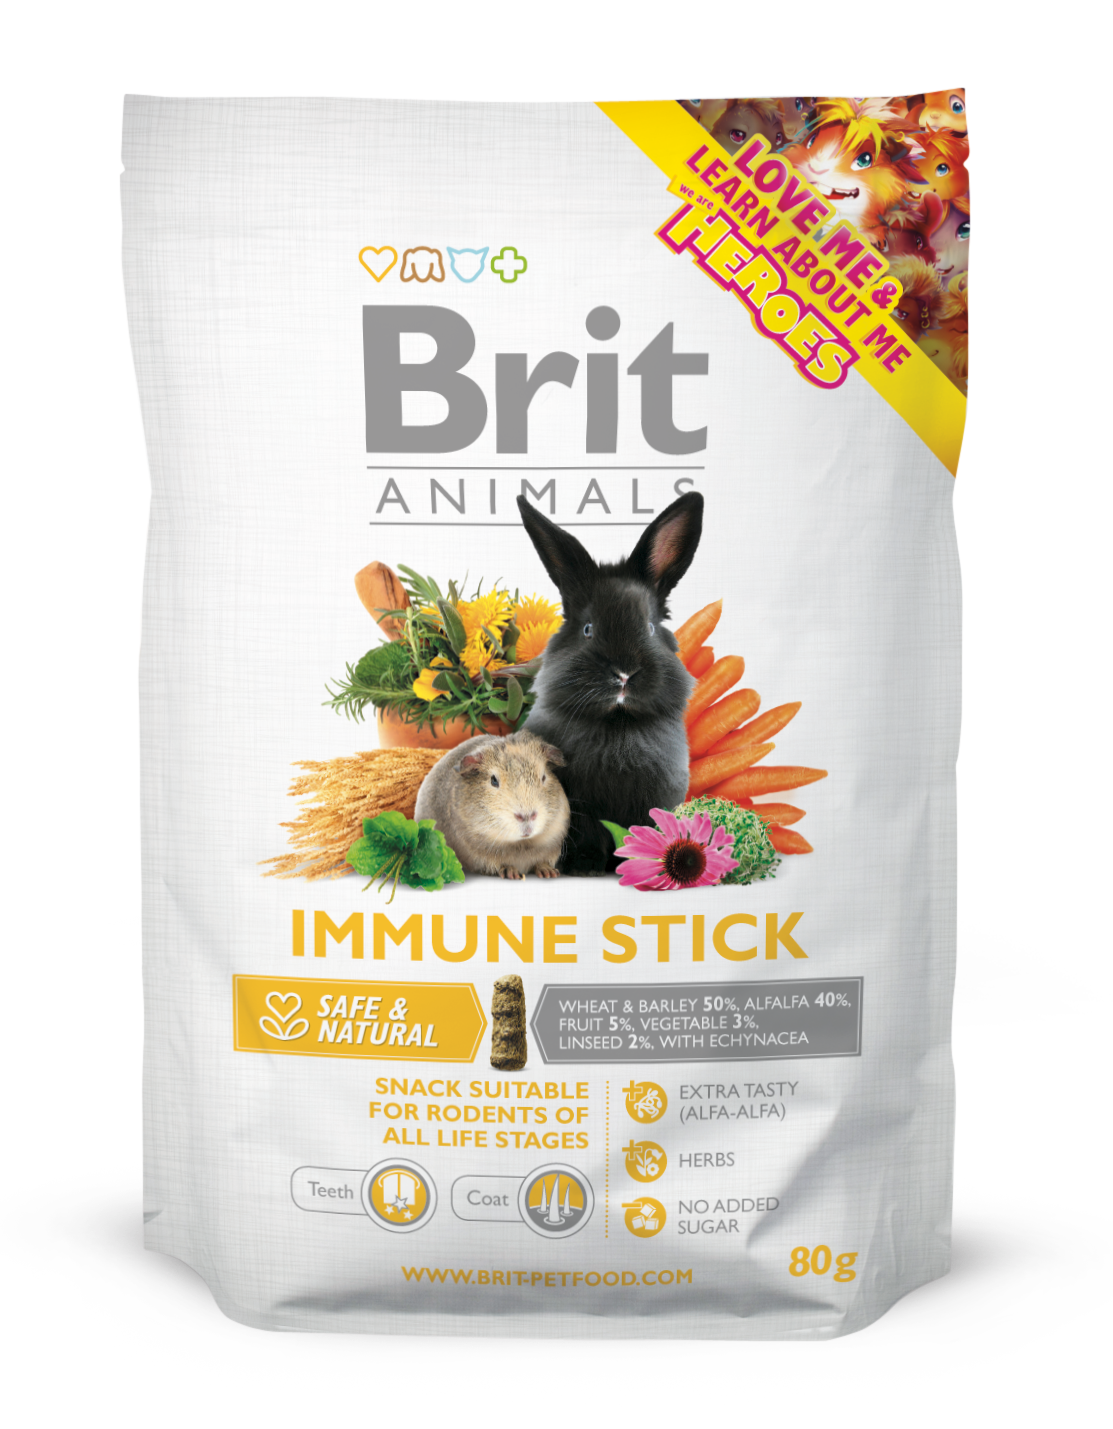 BRIT Animals Immune Stick for Rodents 80g